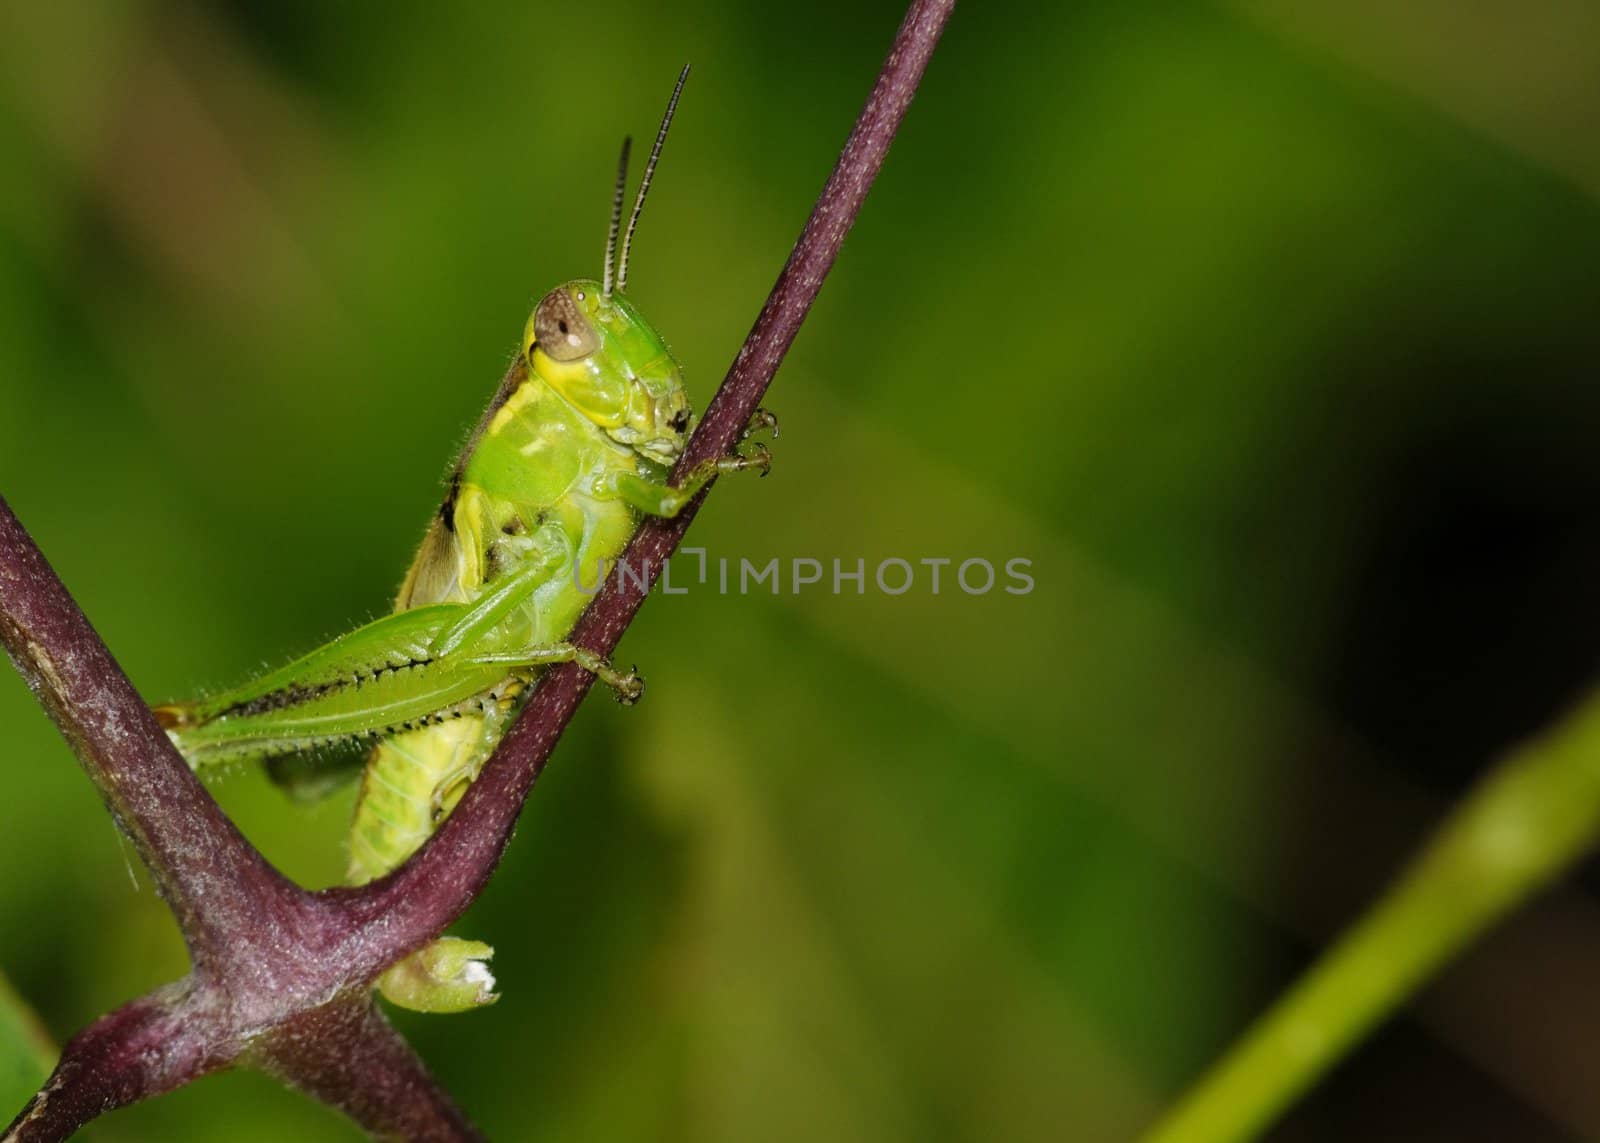 A grasshopper perched on a plant stem.